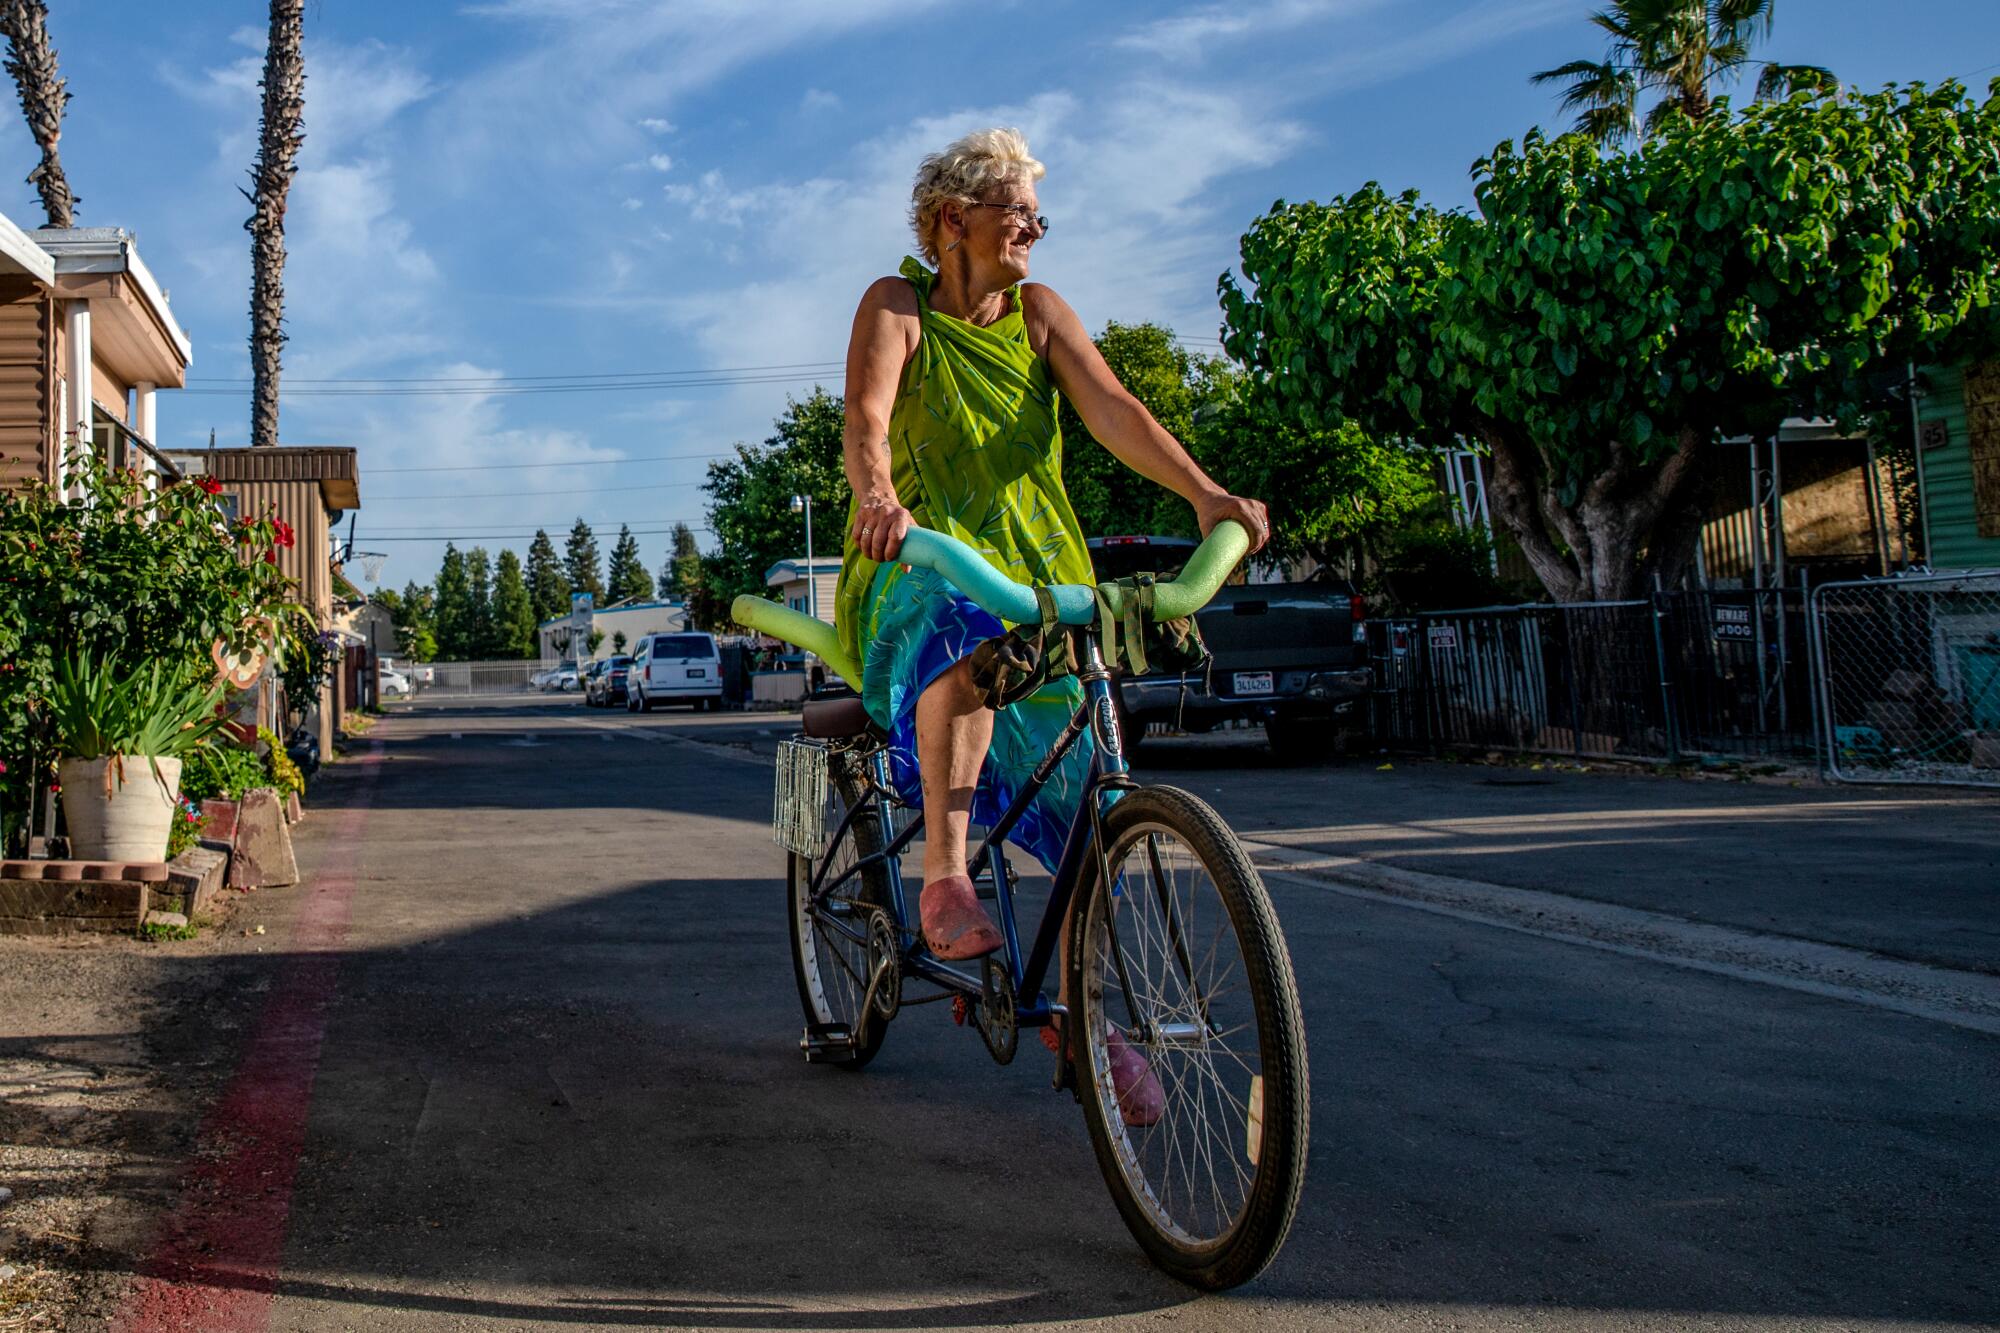 Patricia Shawn, 59, riding a bike